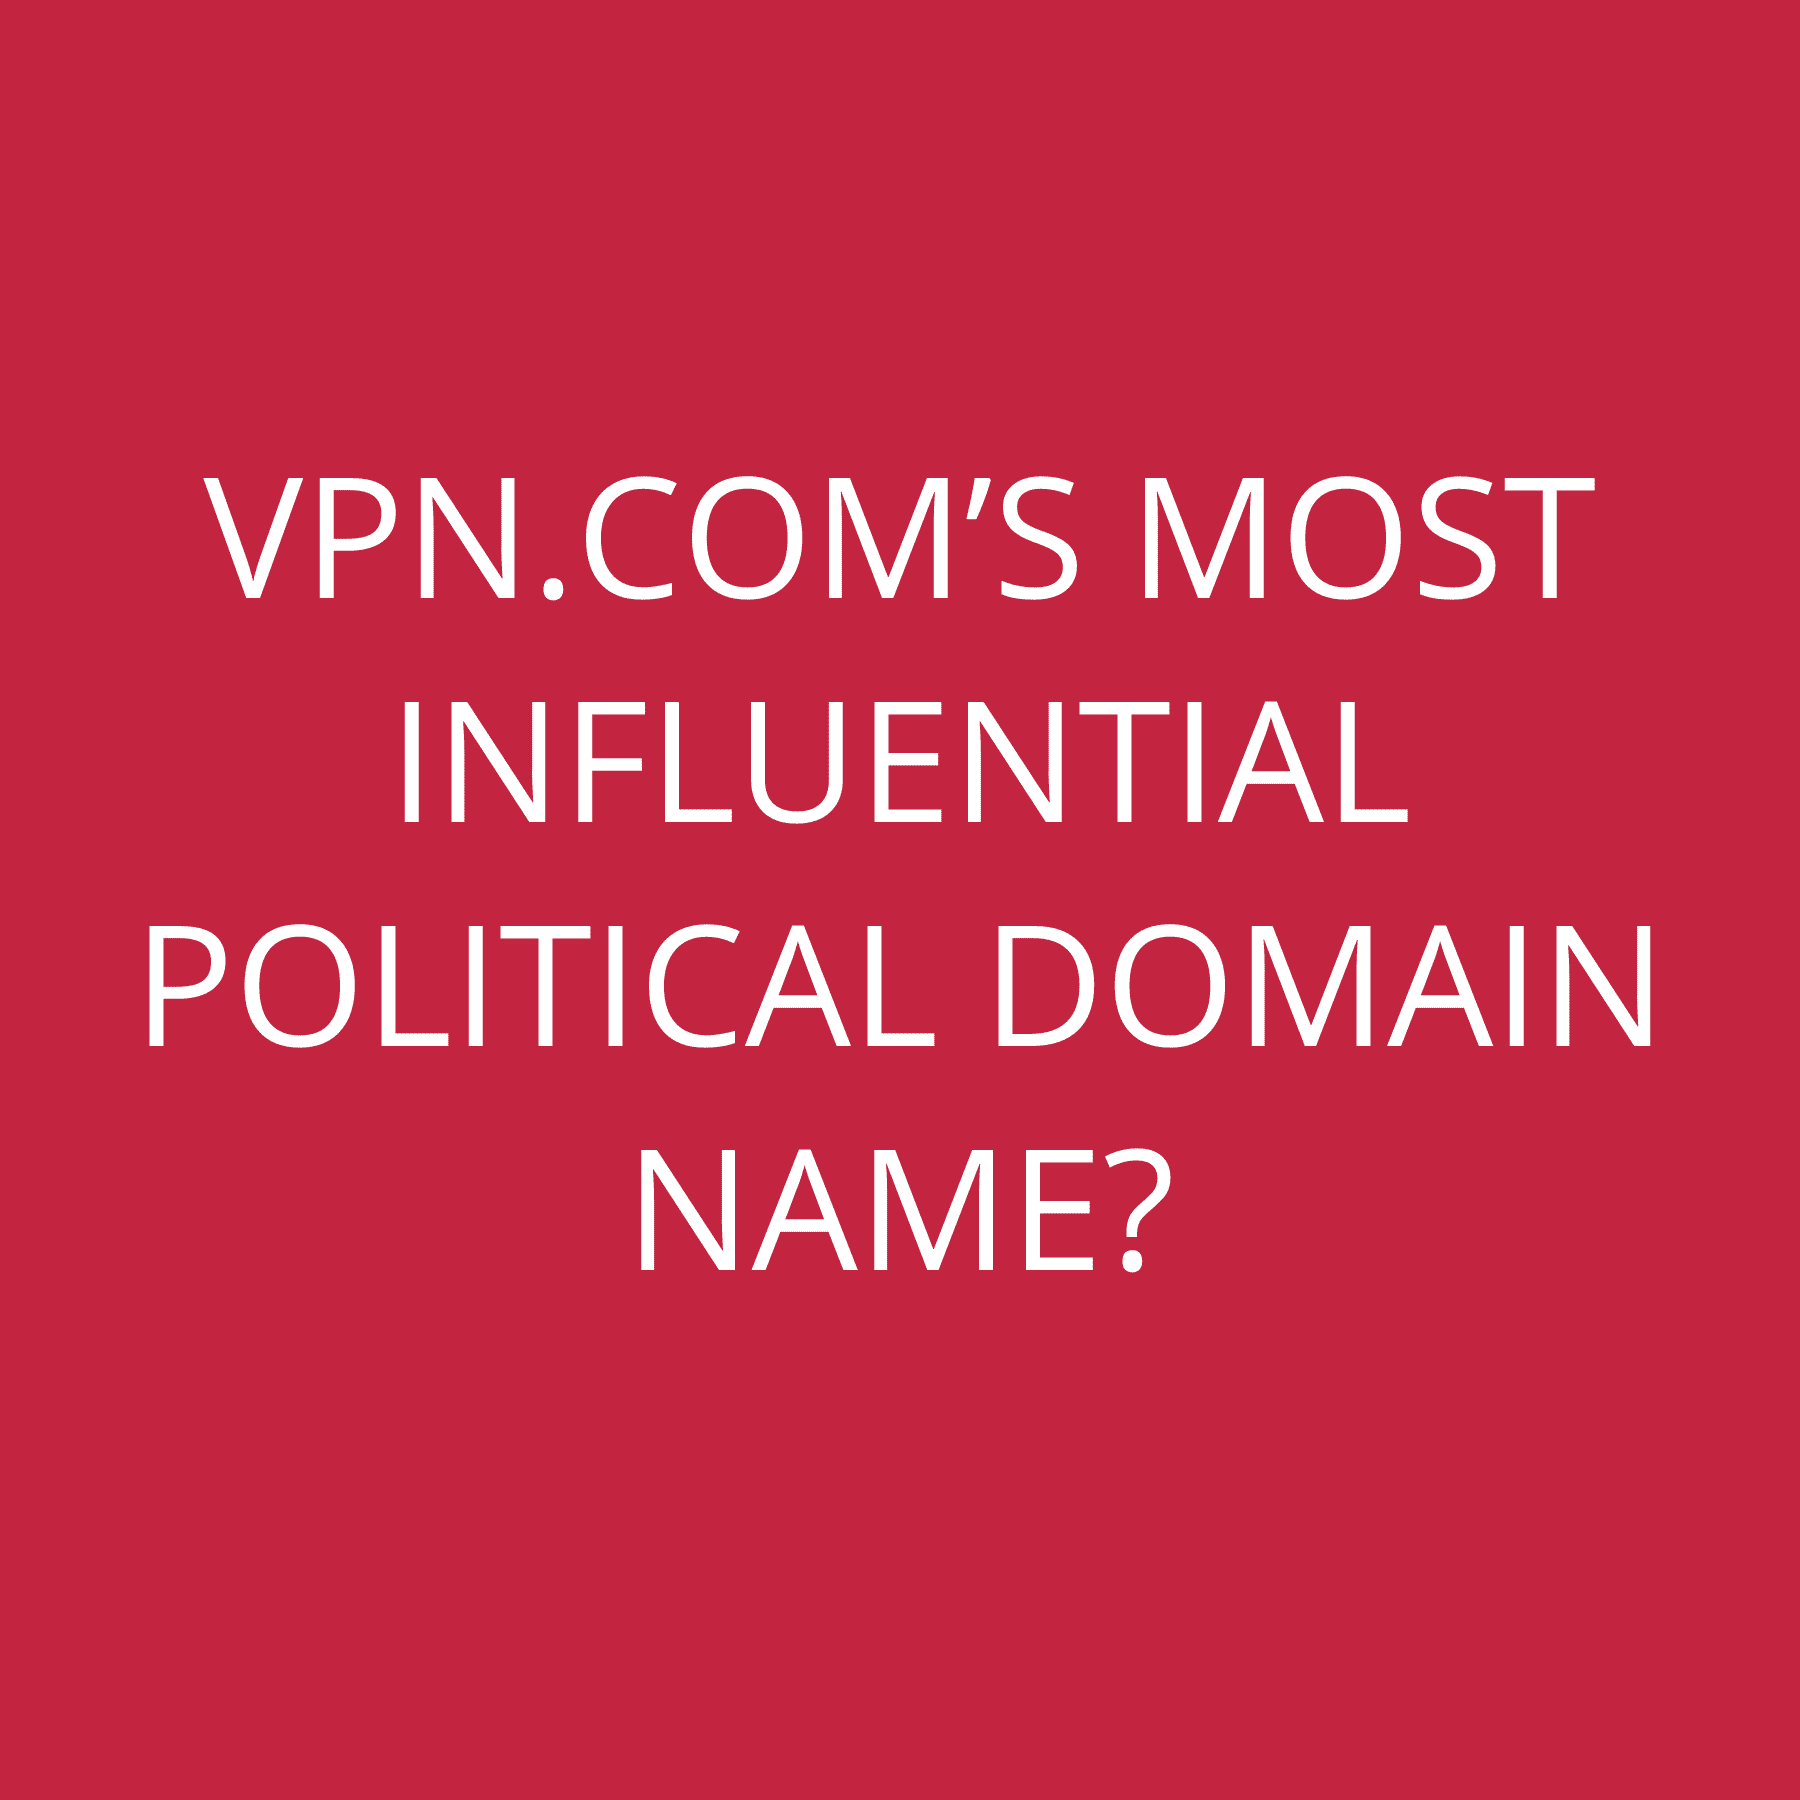 VPN.com’s most influential political domain name?